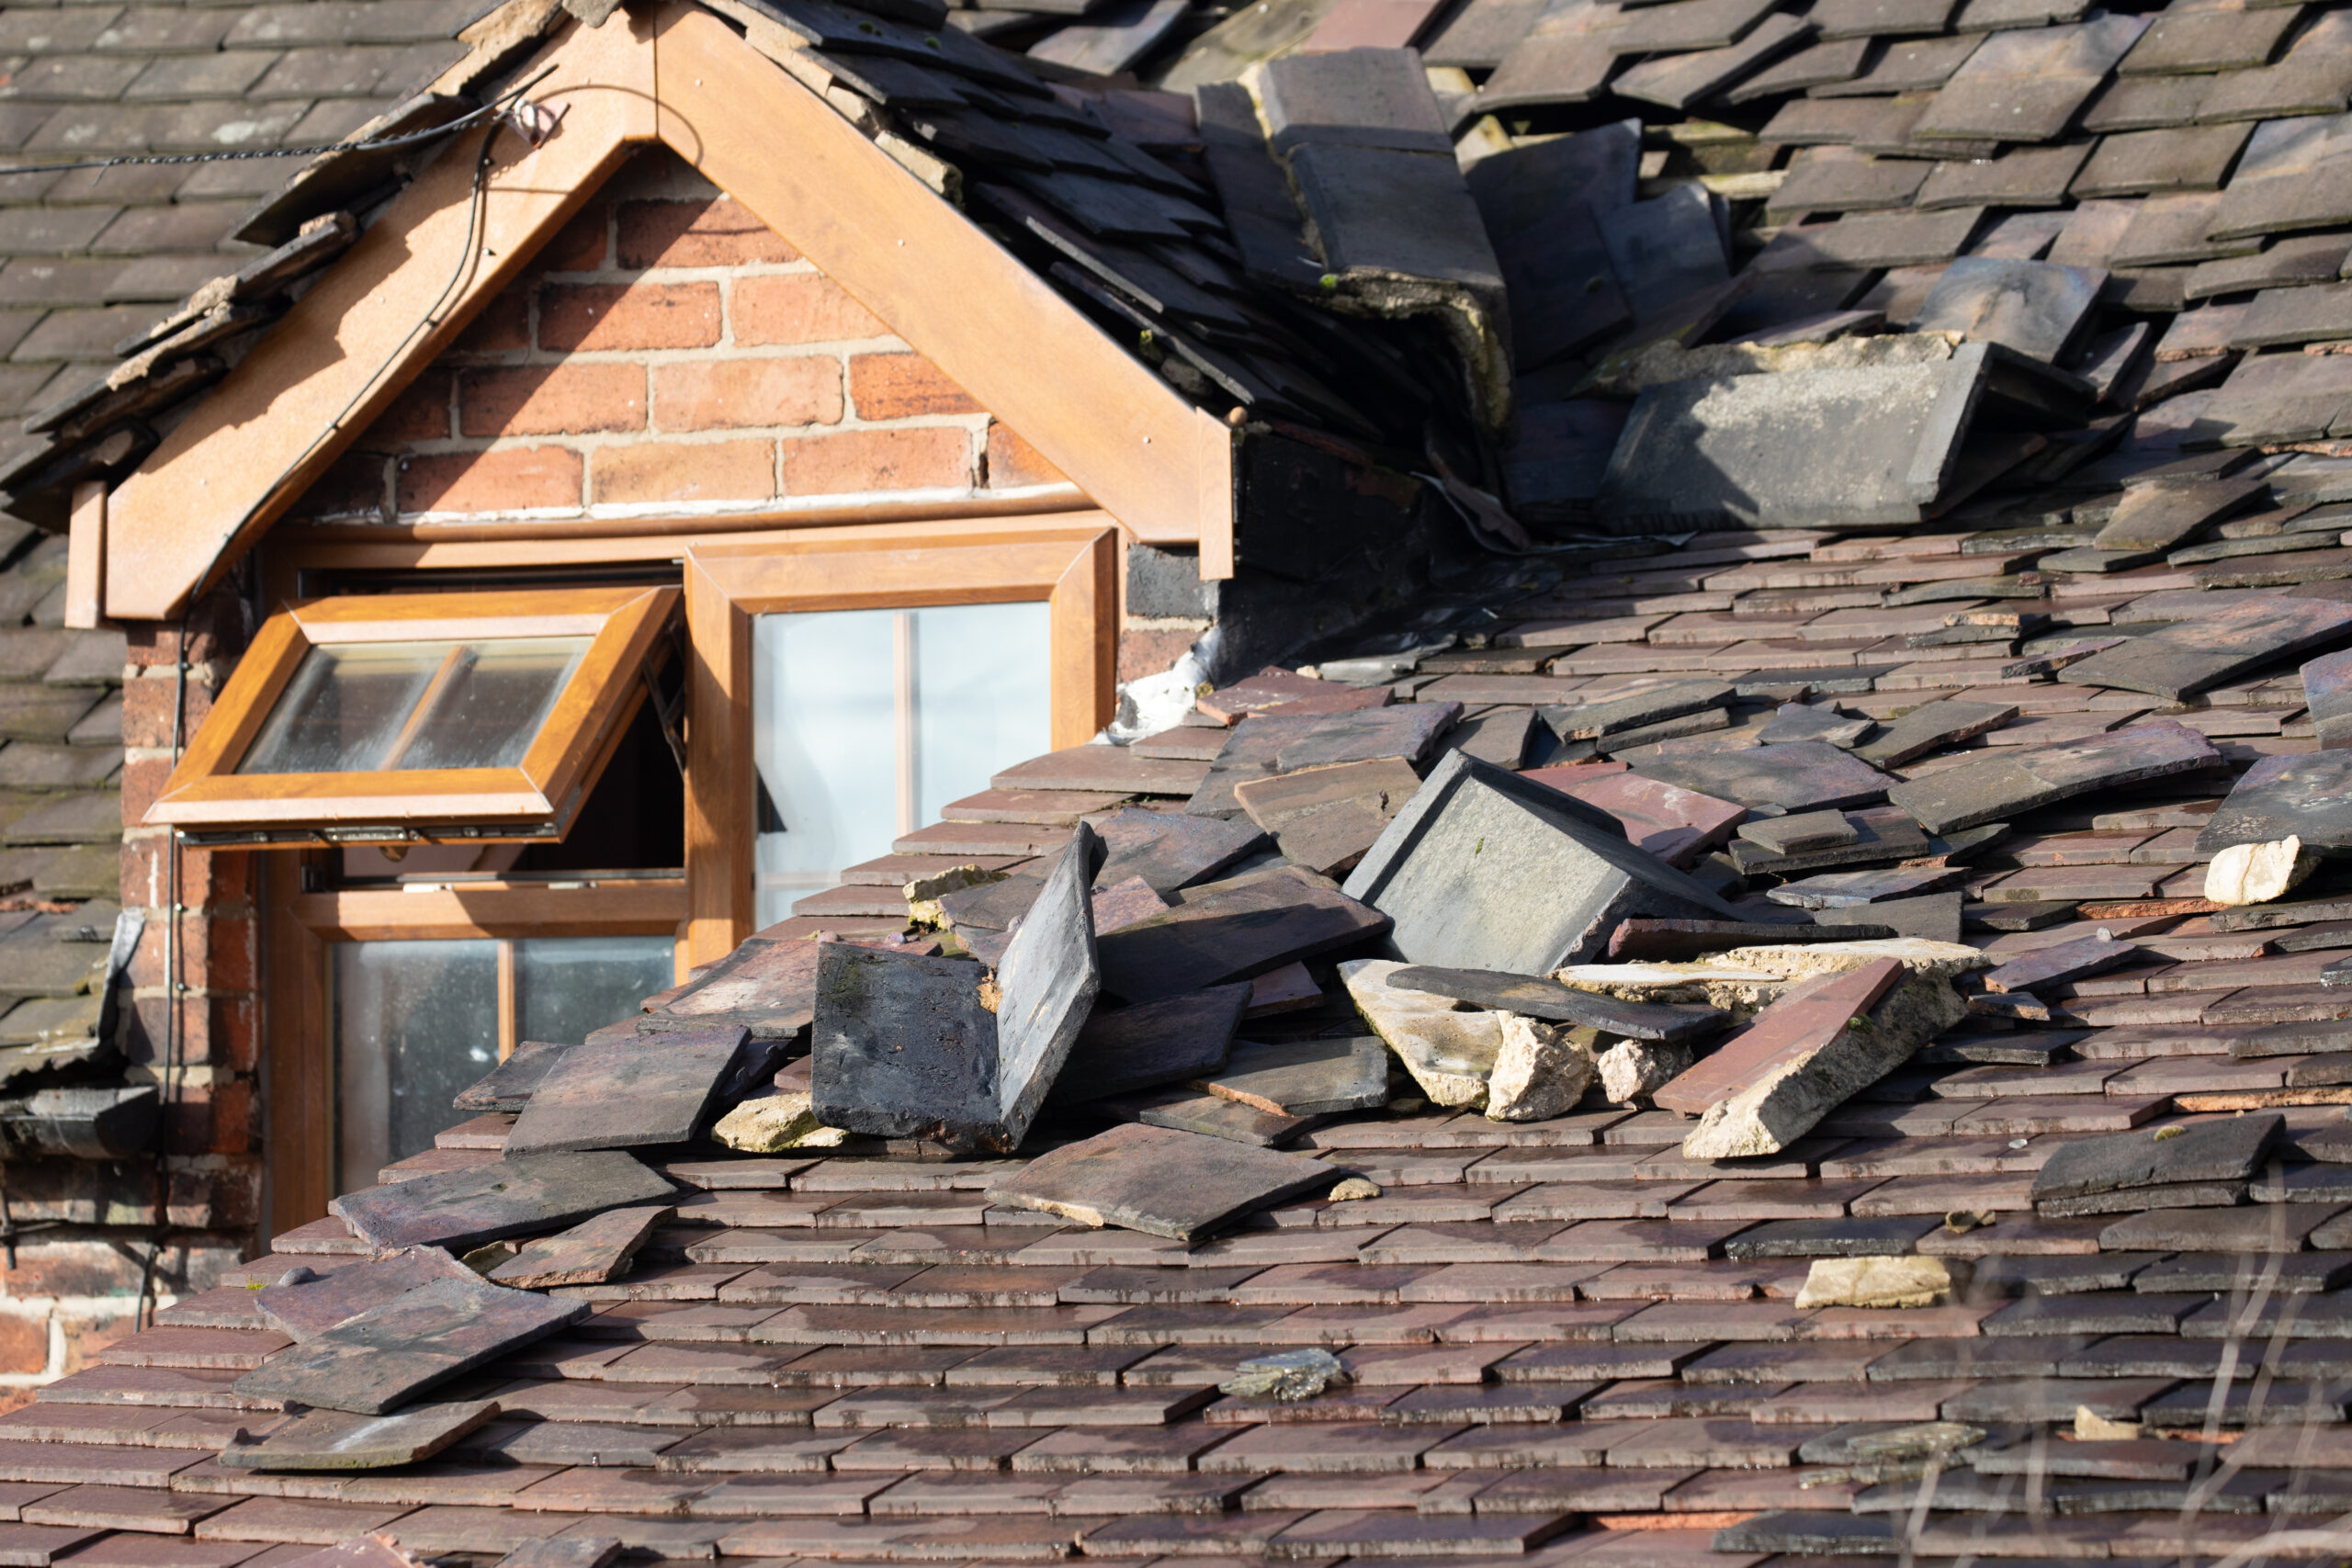 Heavily damaged slate roof after a storm